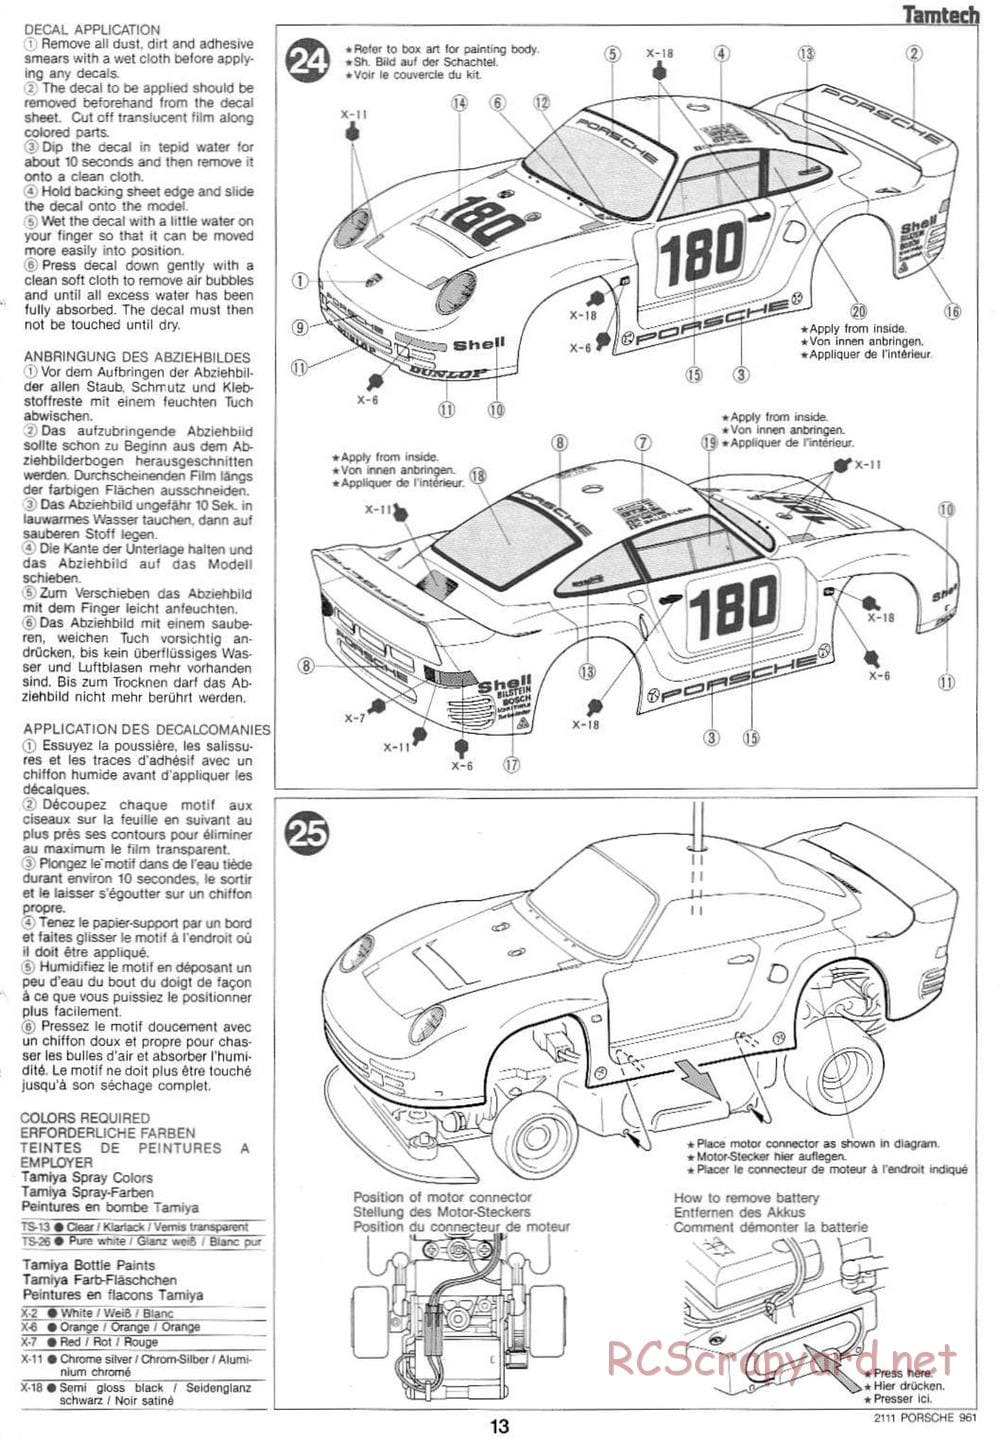 Tamiya - Tamtech - Porsche 961 Chassis - Manual - Page 13